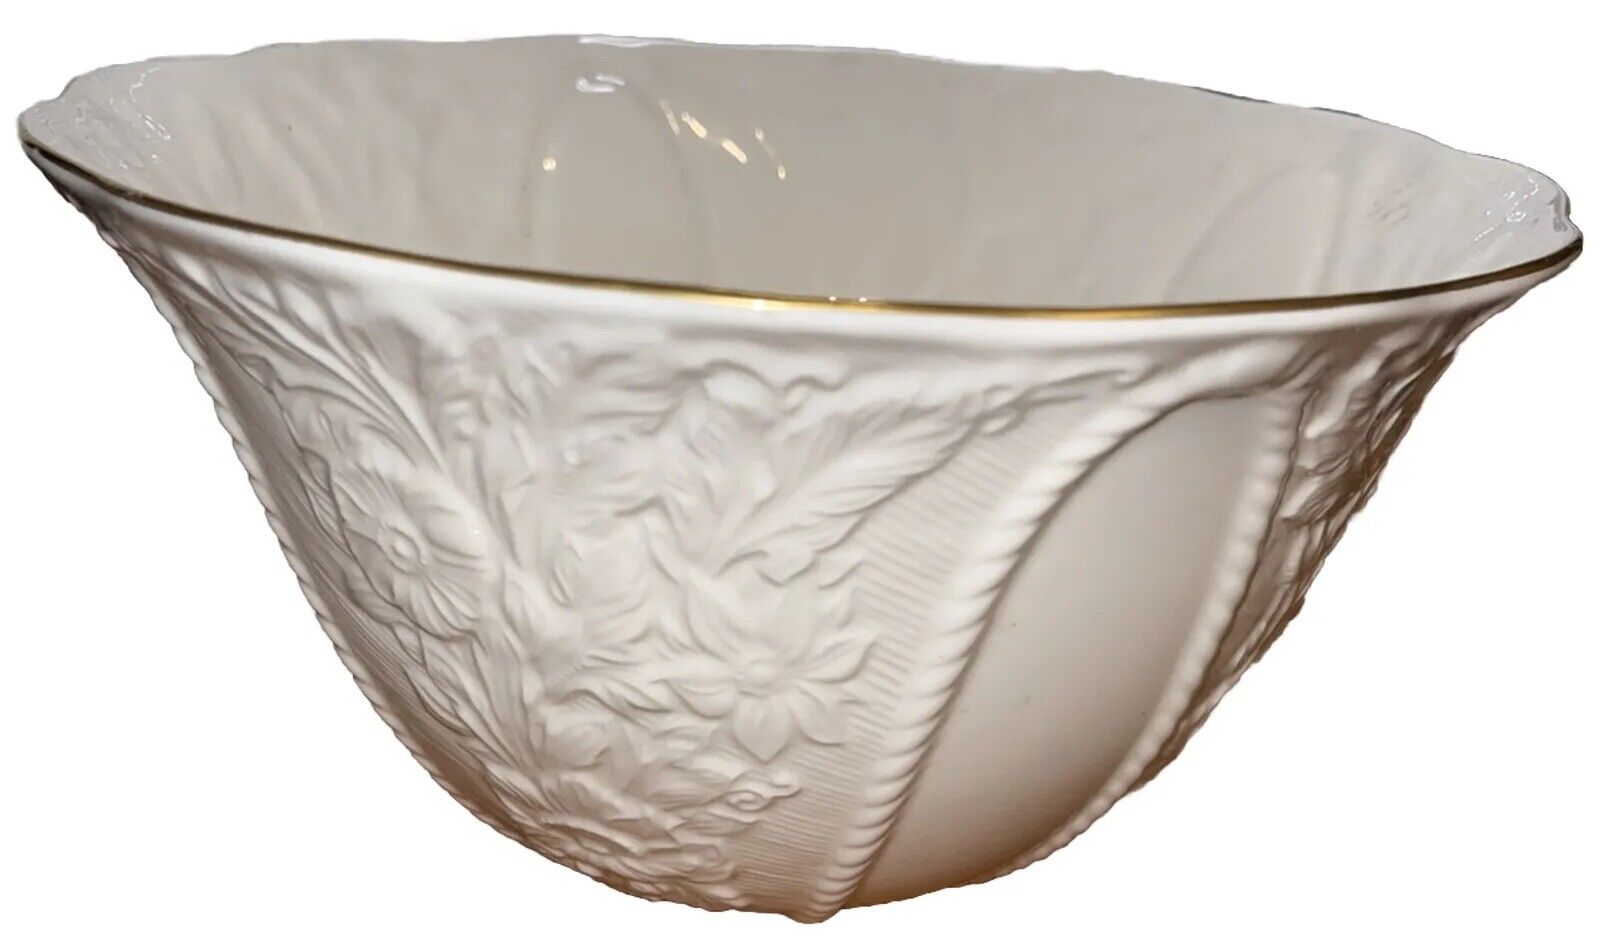 American Artware Pfaltzgraff Serving Bowl White Bone China Pretty Nice